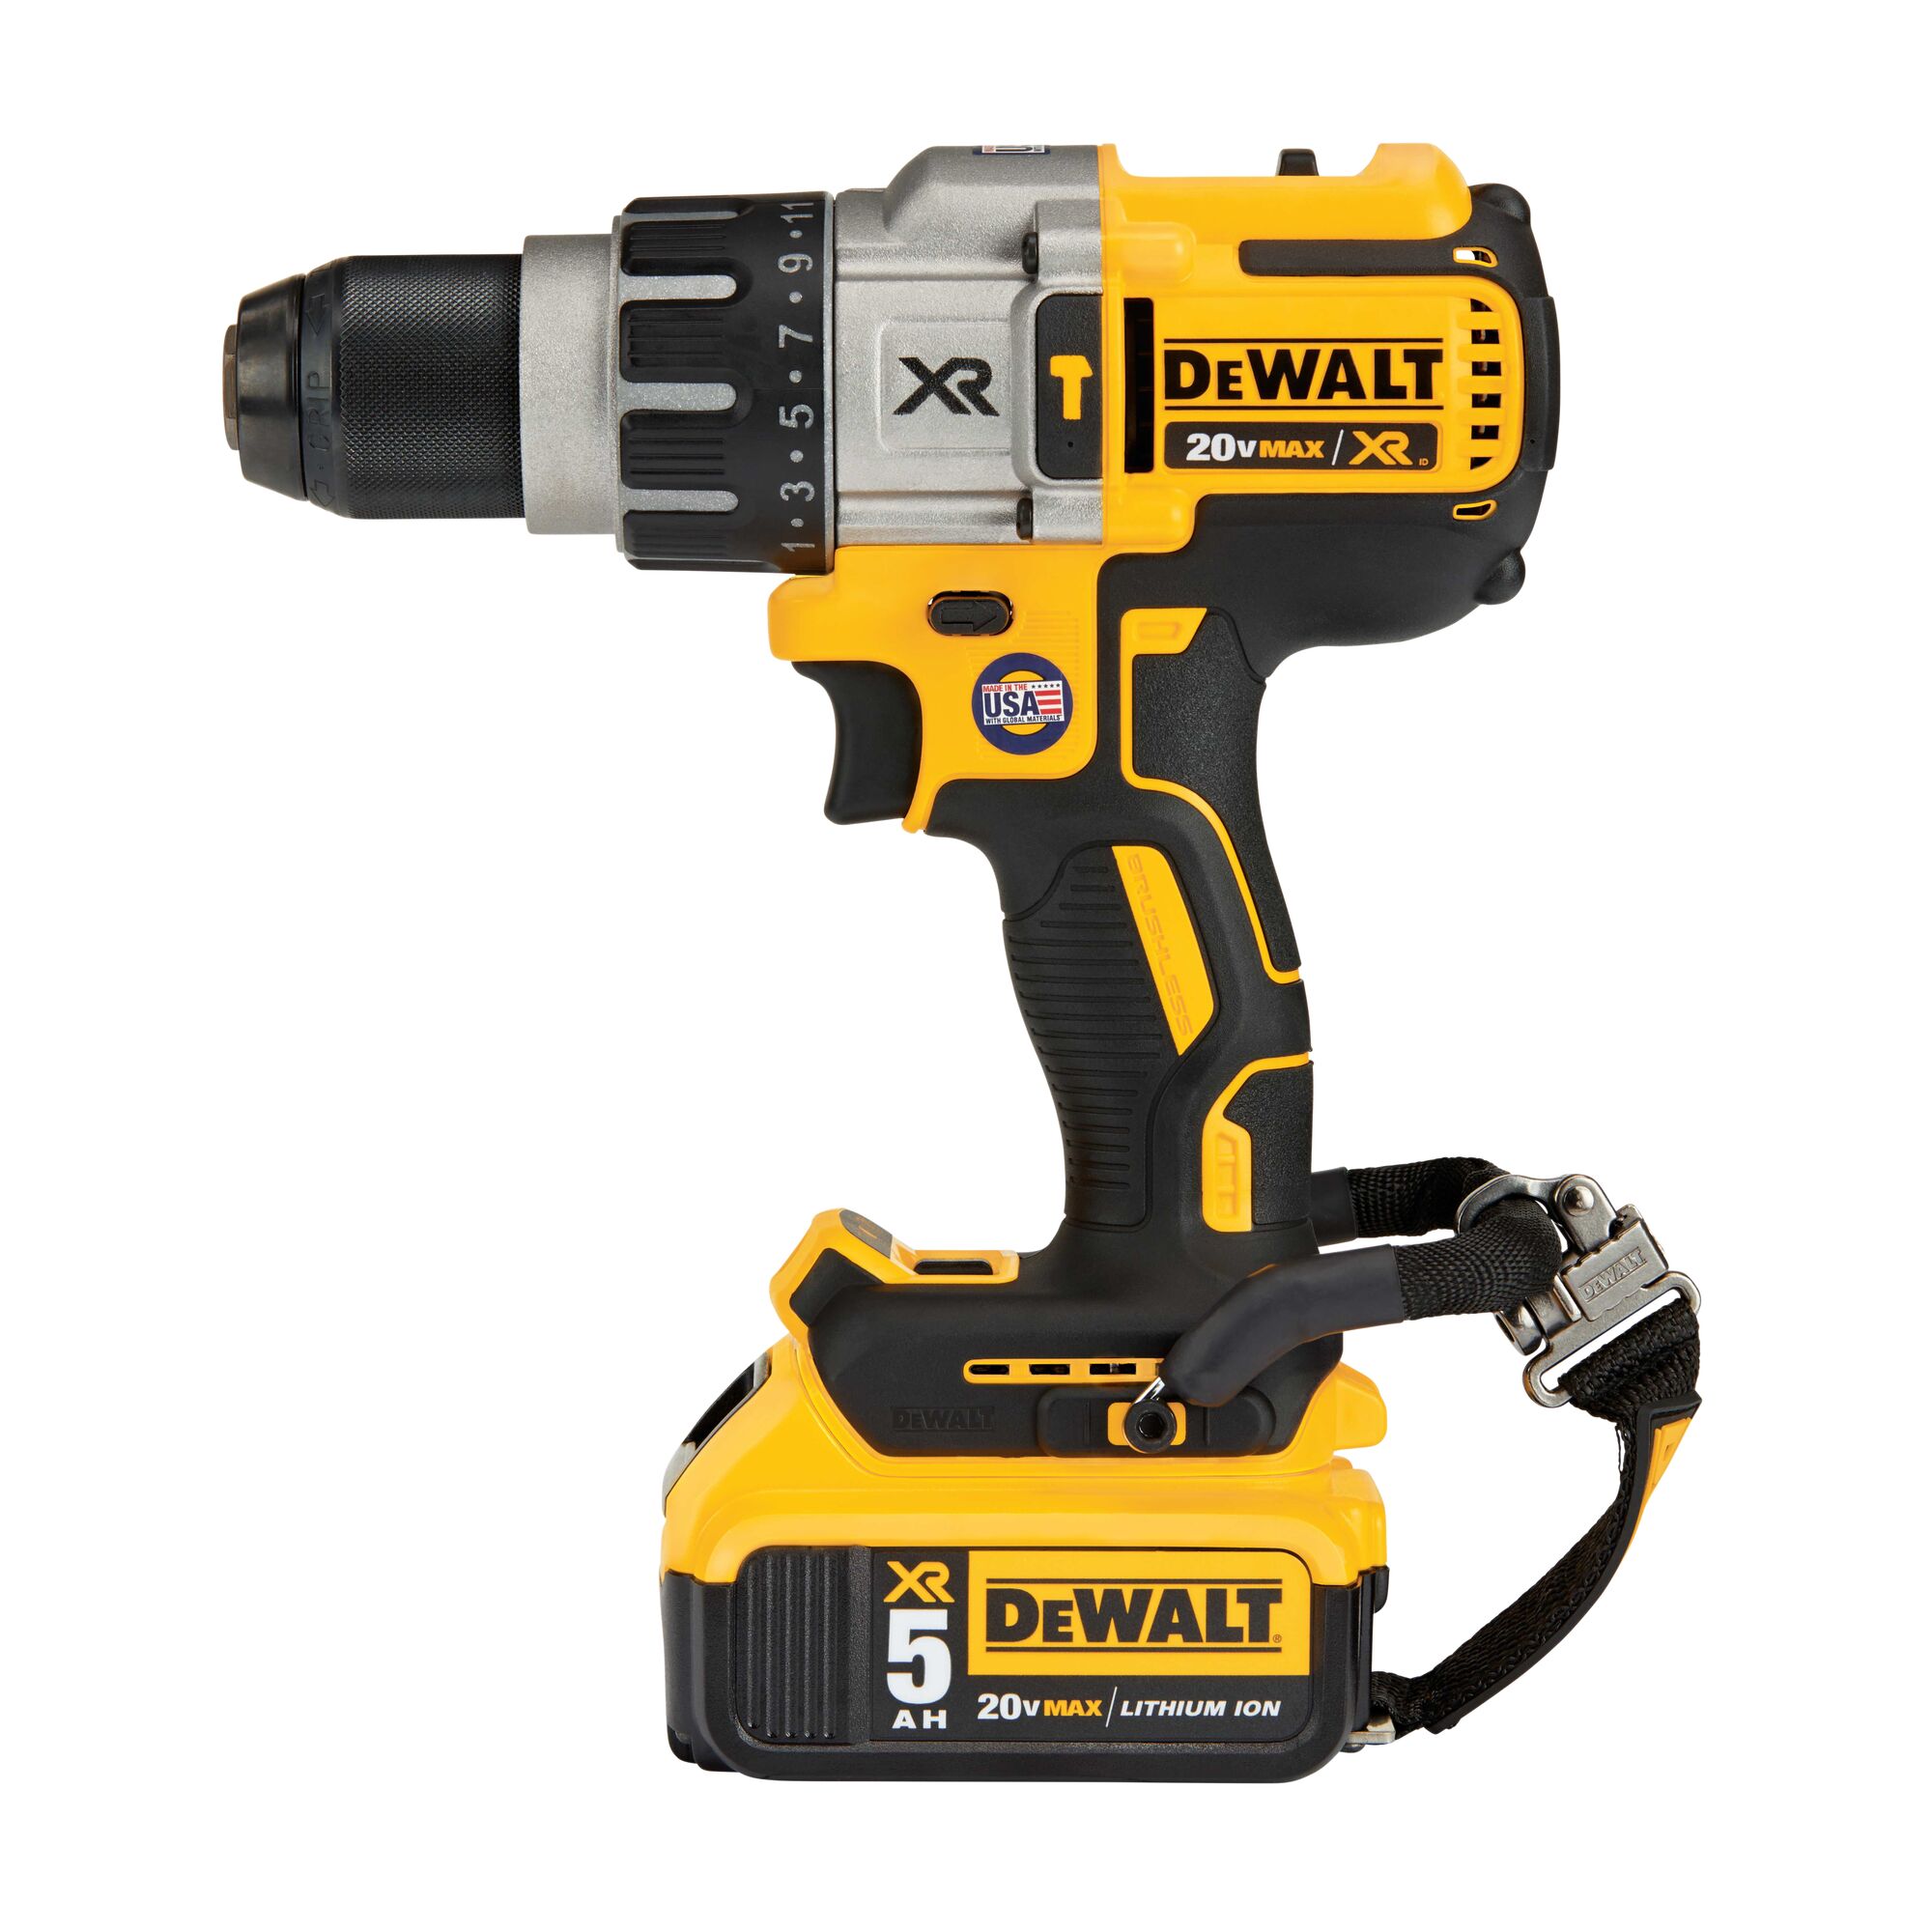 dewalt hammer drill impact driver combo kit